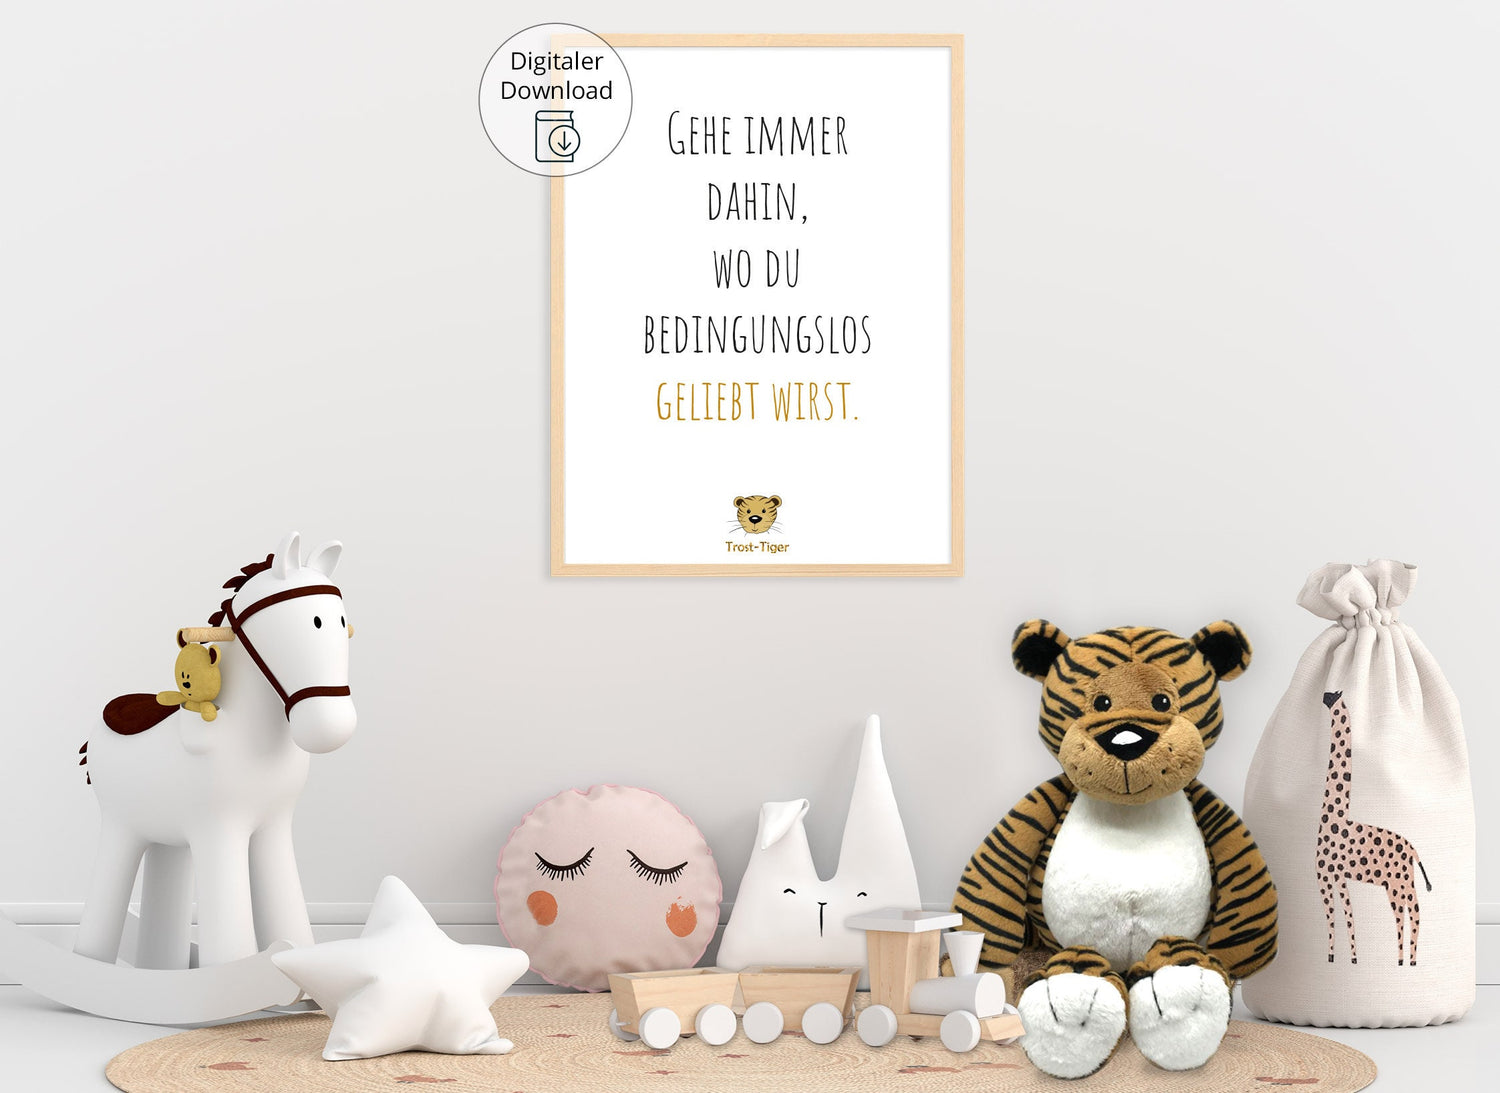 Digitaler Download Poster Trost-Tiger, Plakat Deko Kinderzimmer, Kunstdruck, Print, Sprüche Kinderbild